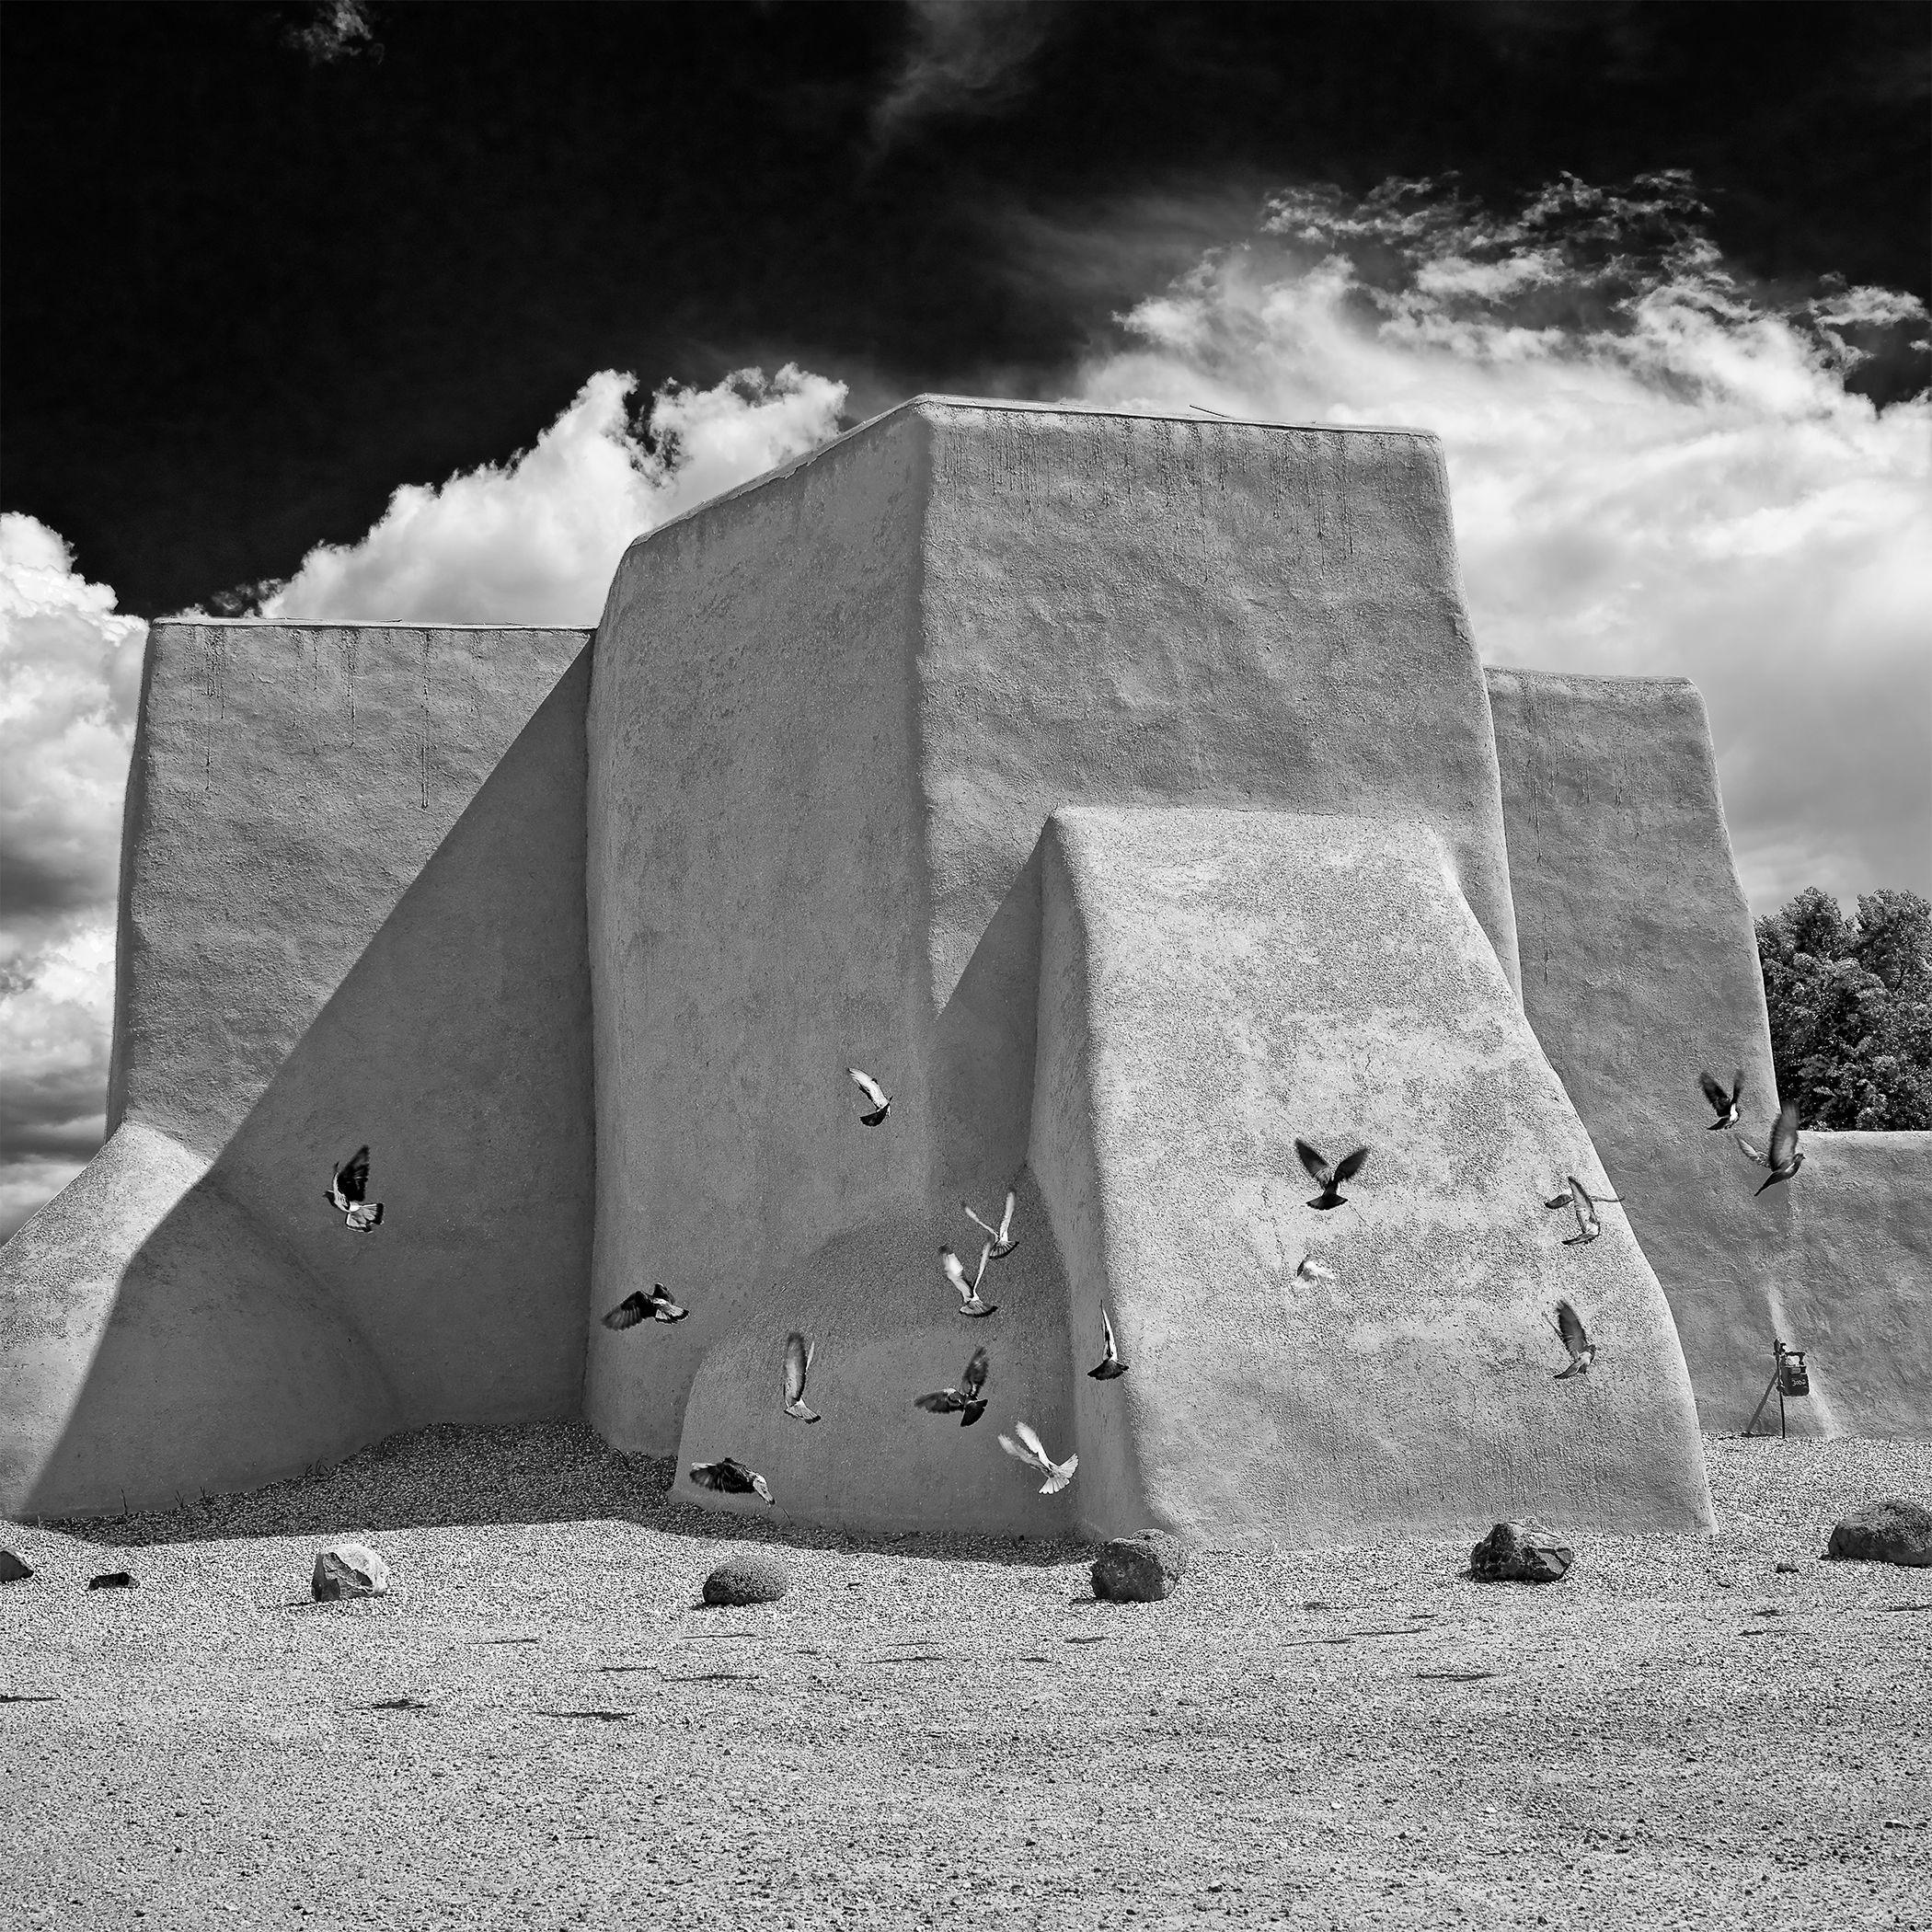 Daniel Ashe Black and White Photograph - Rancho de Taos No. 3 - METAL PRINT WALL ART, Photograph, C-Type